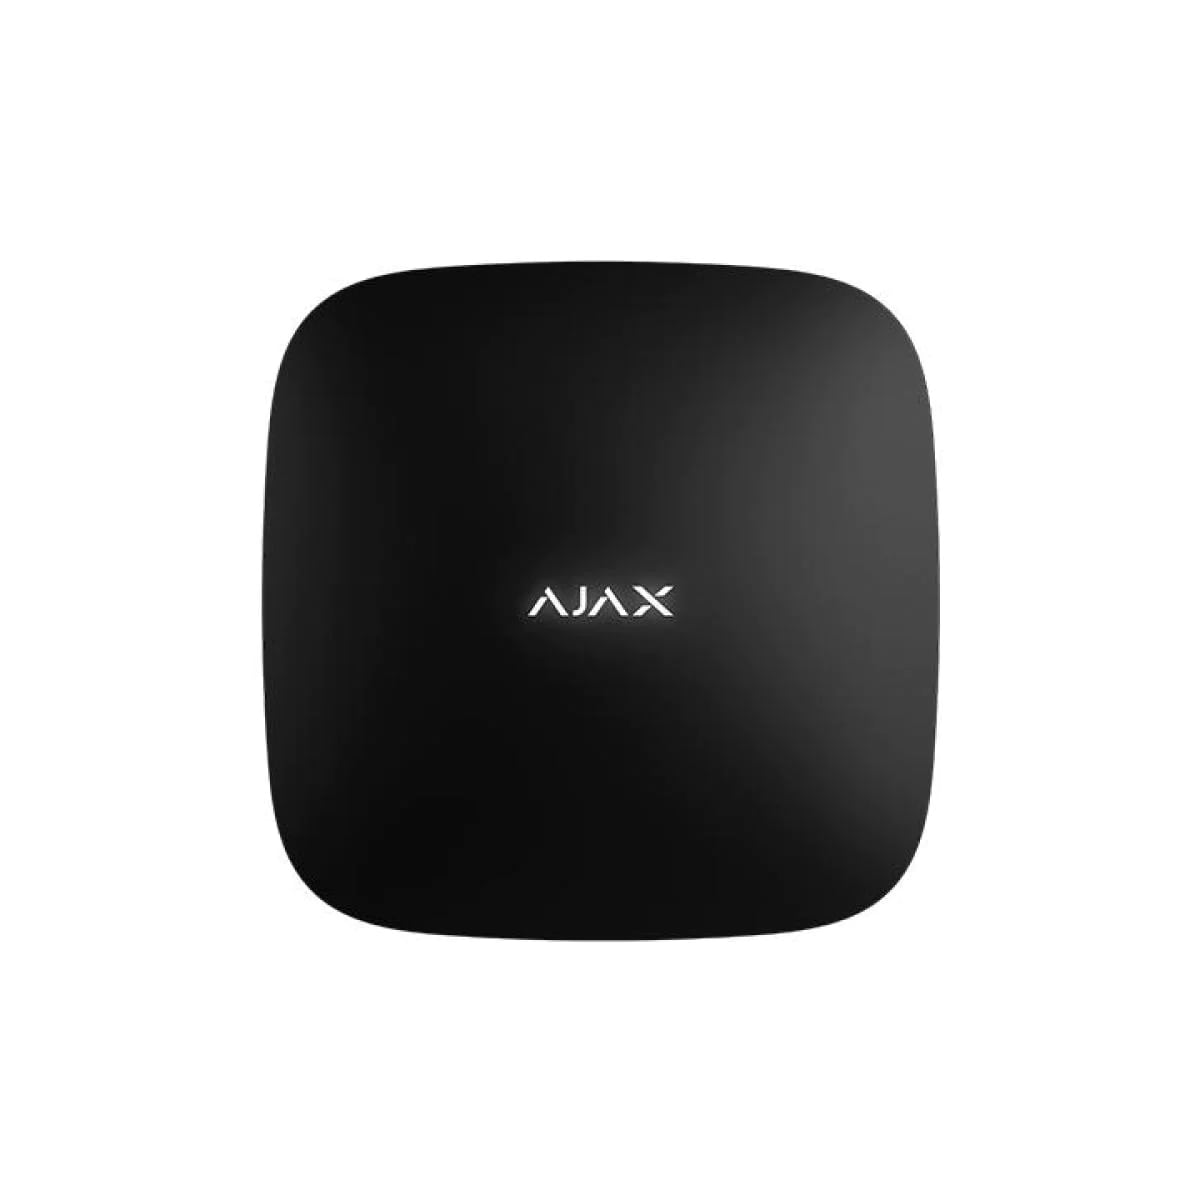 Ajax ReX 2 Radio signal range extender